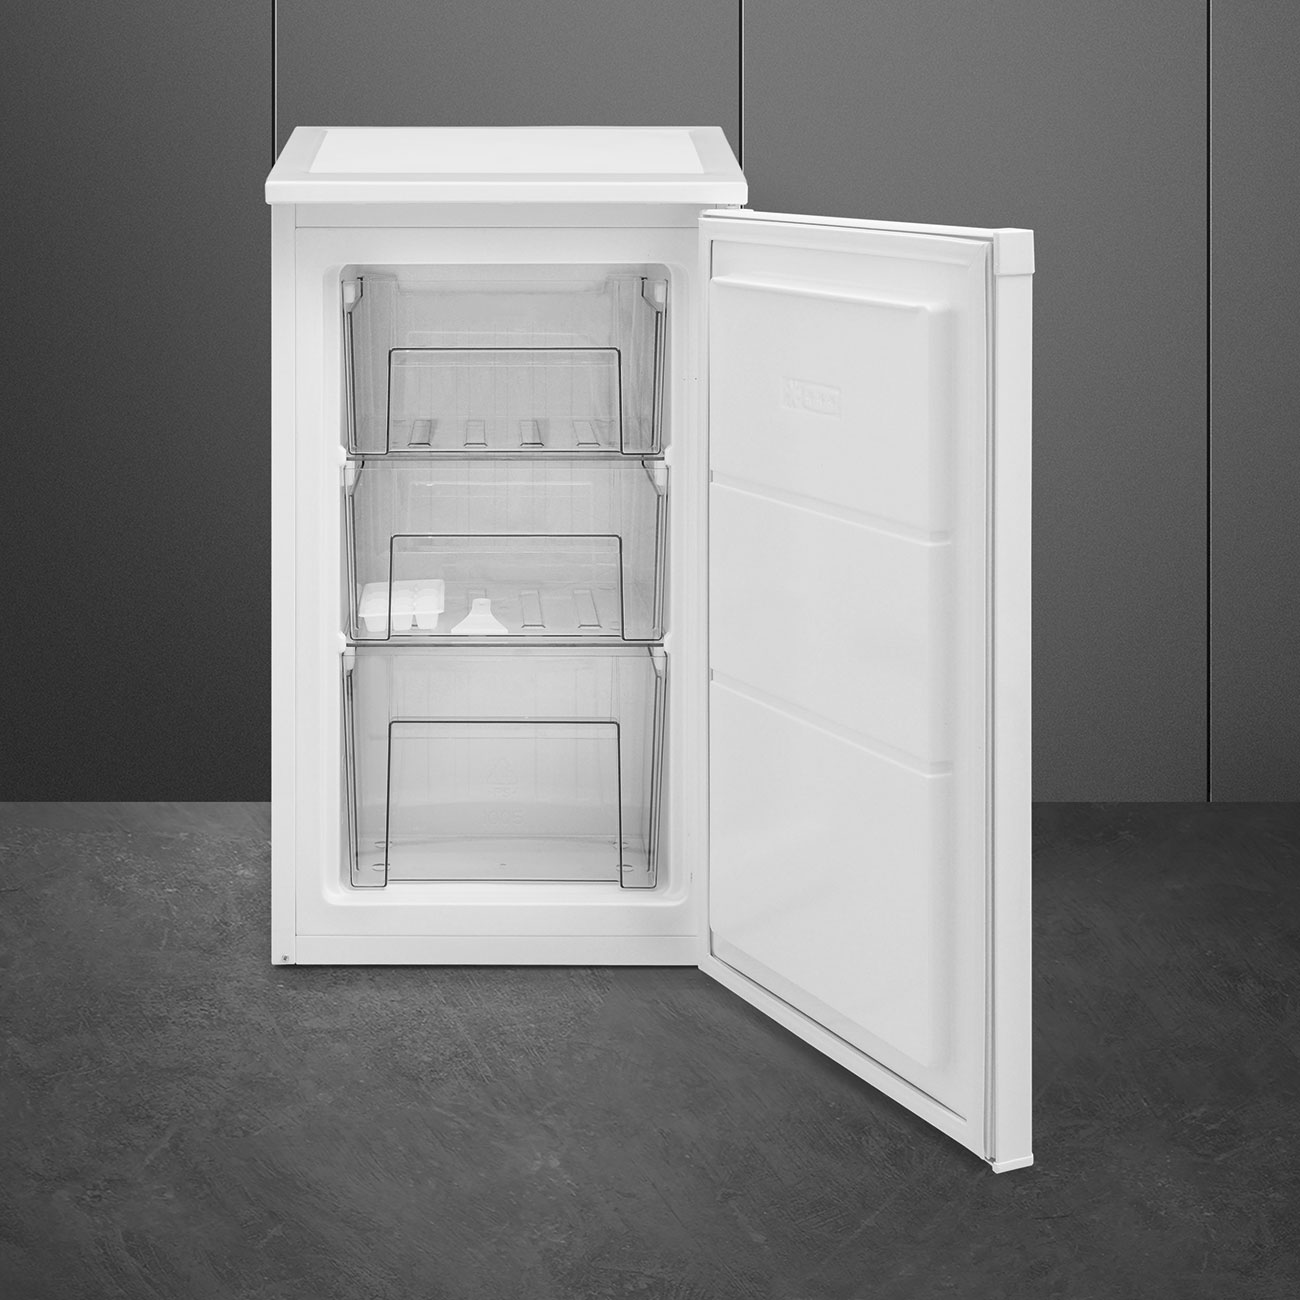 Under counter Free Standing freezer- Smeg_2